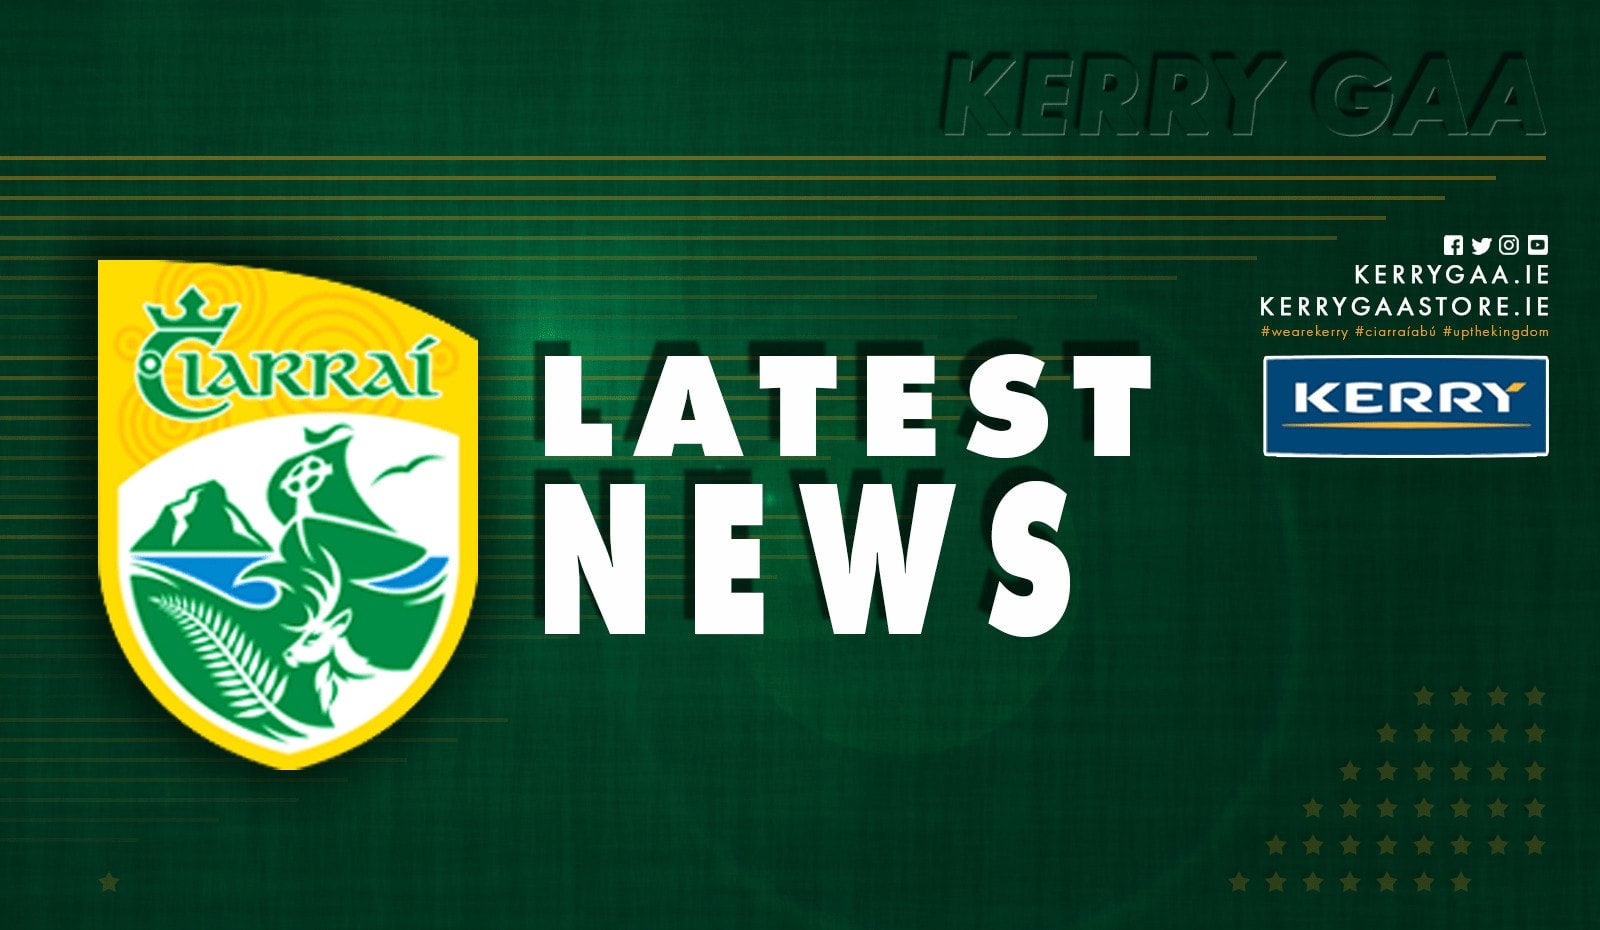 Match Programme – Kerry vs Cork